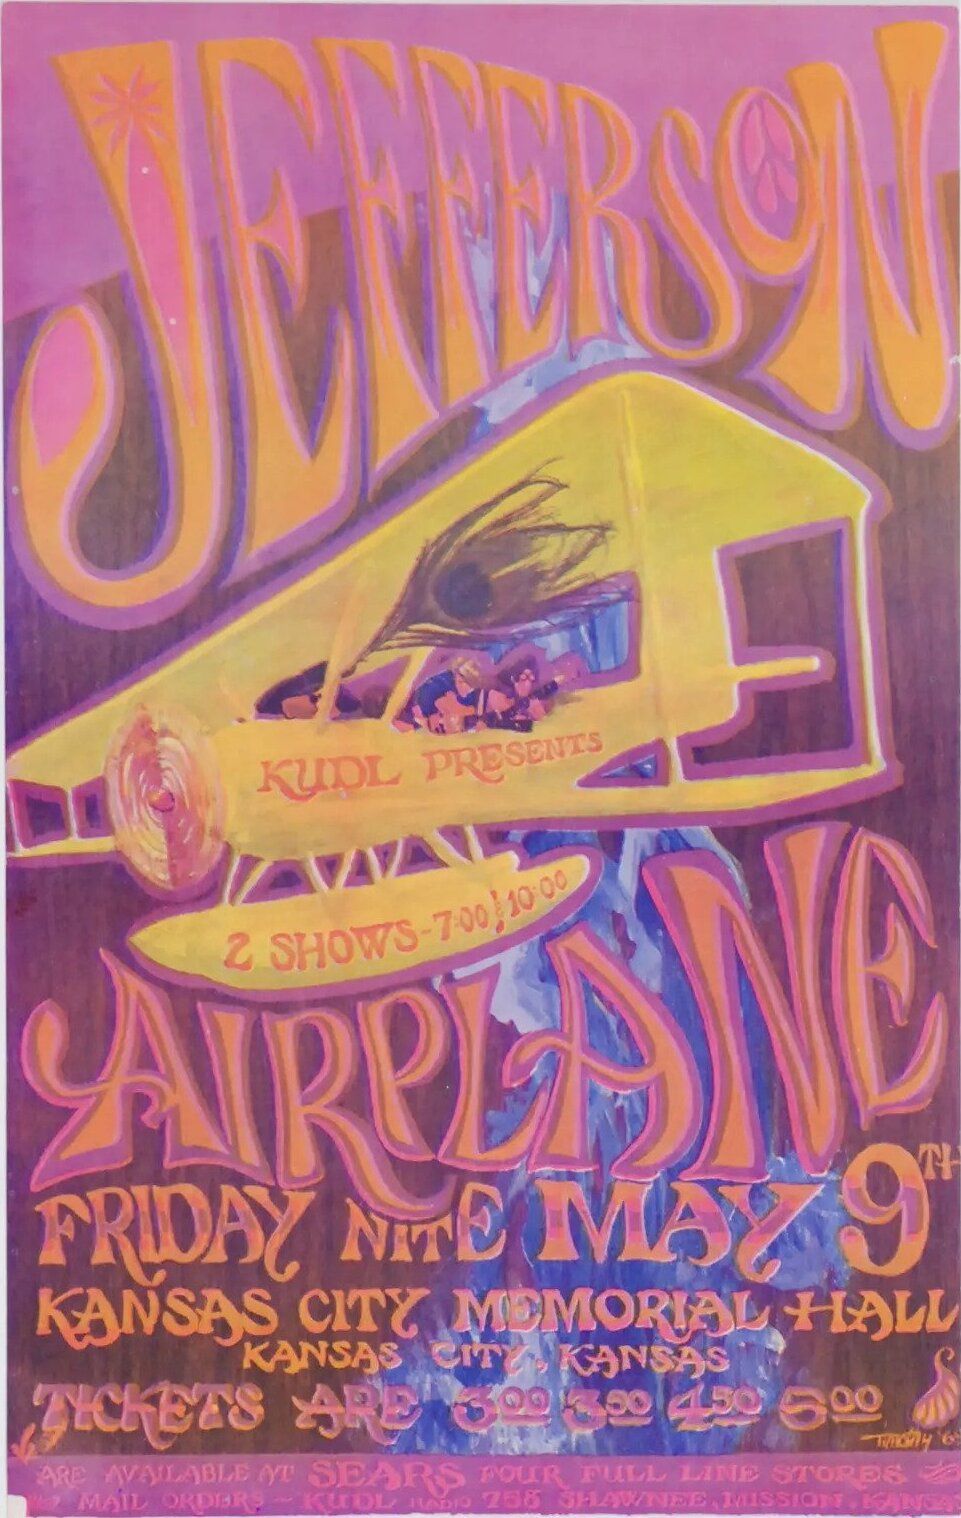 1969–Kansas City Soldiers & Sailors Memorial Hall-Jefferson Airplane Concert Poster